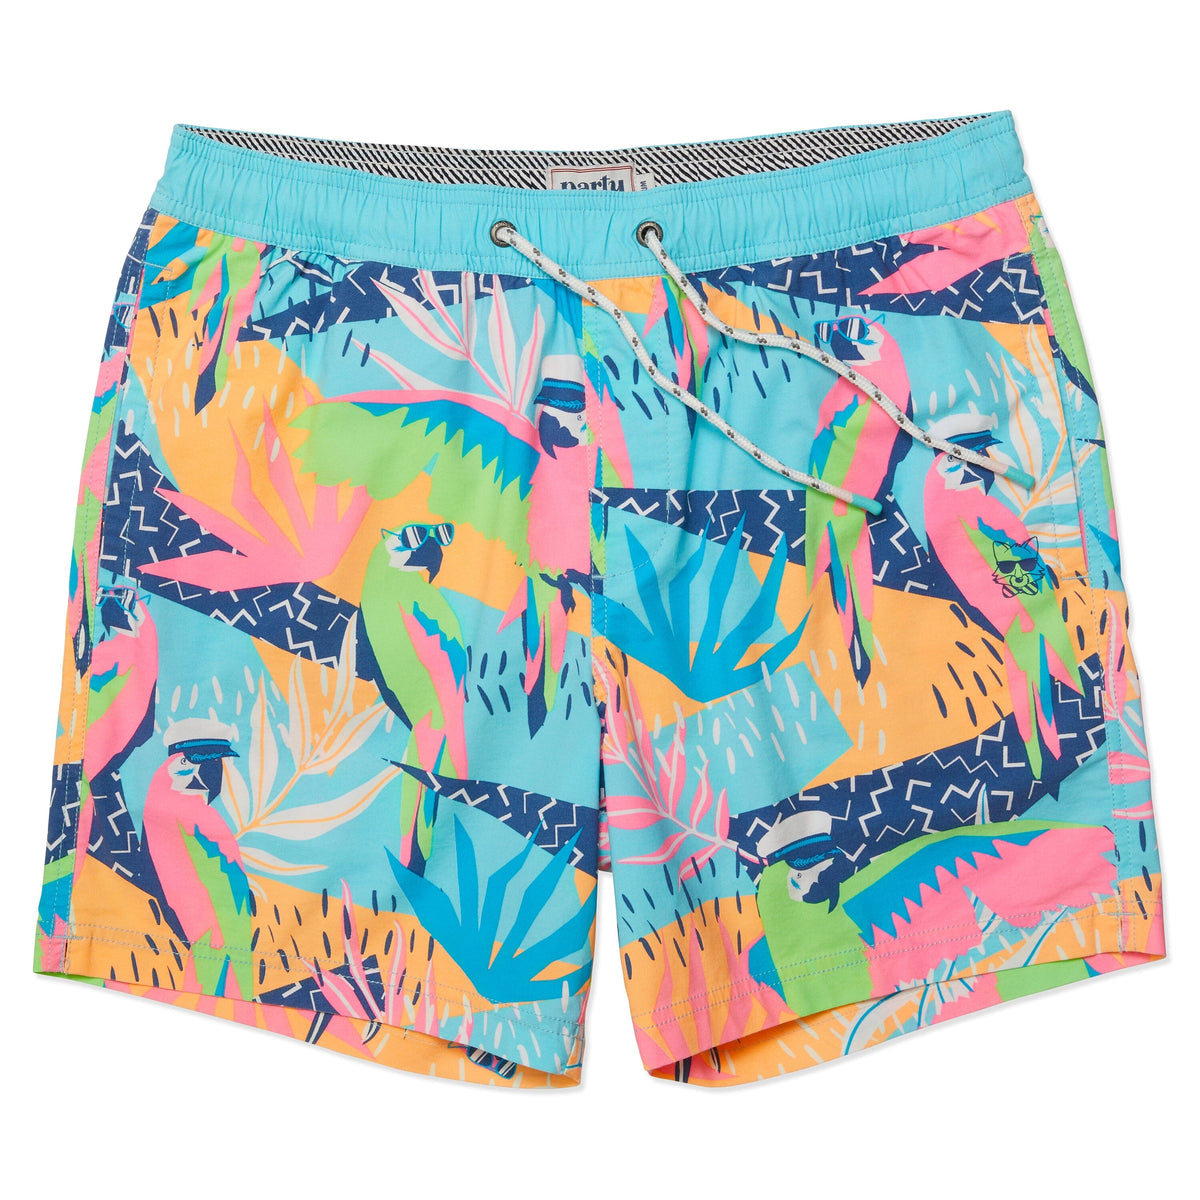 Light Blue - Captn Macaw Party Shorts - Printed Men's Preppy Swim ...